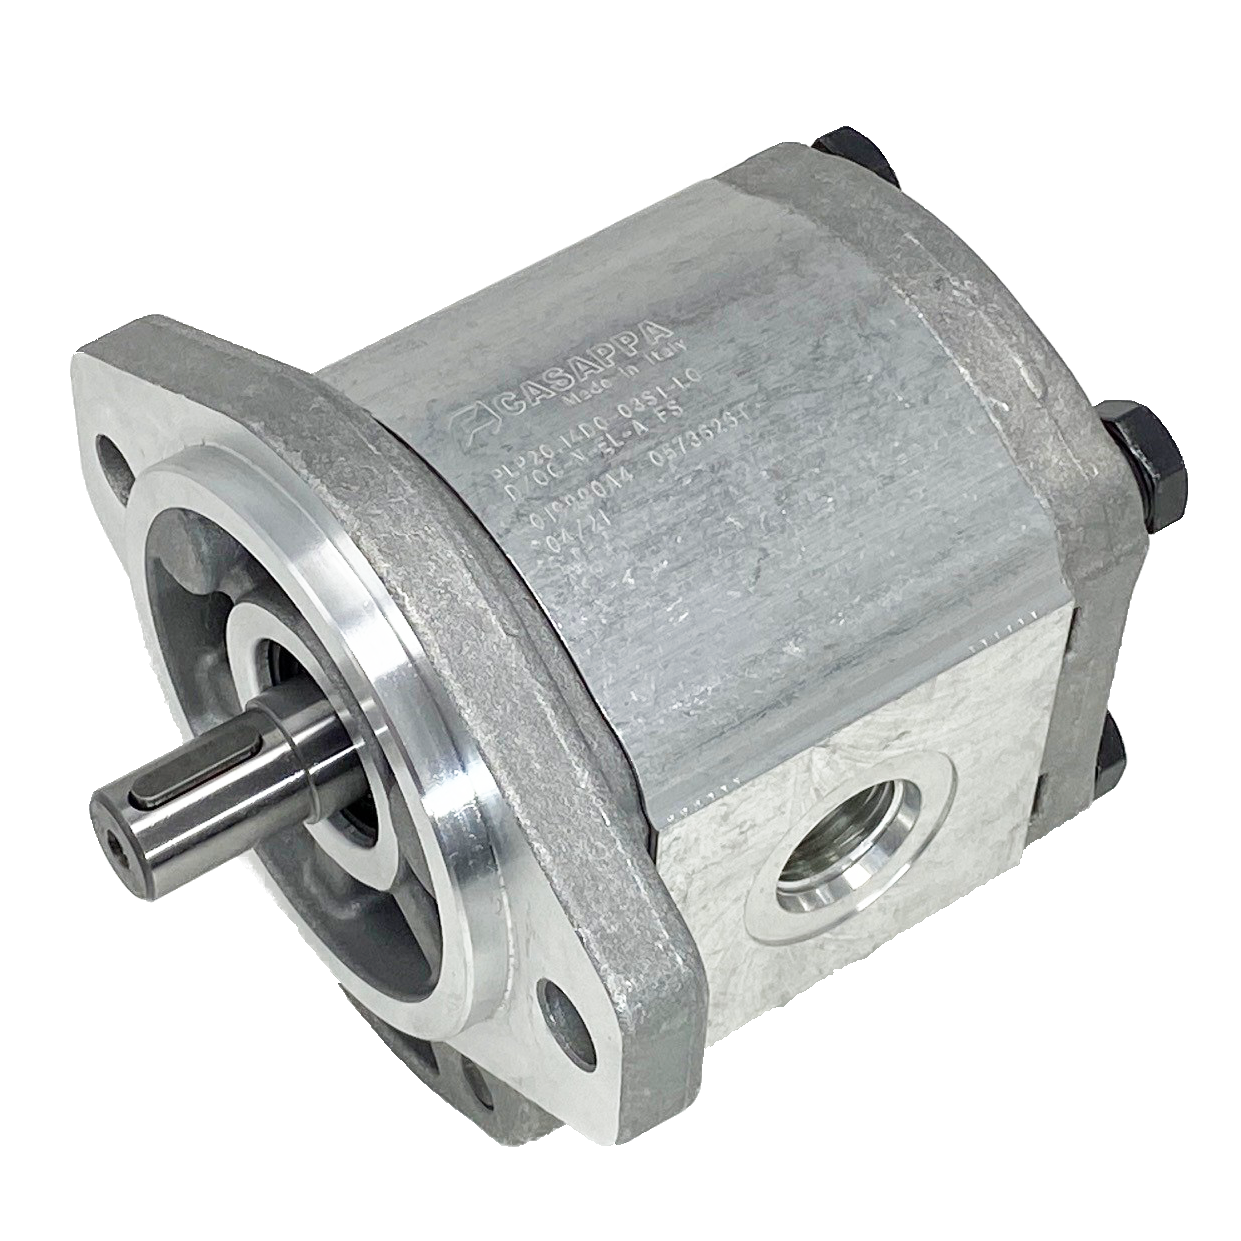 PLM20.20R0-31S1-LOC/OD-N-EL : Casappa Polaris Gear Motor, 21.14cc, 2900psi Rated, 3000RPM, Reversible Rear External Drain, 5/8" Bore x 5/32" Key Shaft, SAE A 2-Bolt Flange, 0.625 (5/8") #10 SAE Inlet, 0.75 (3/4") #12 SAE Outlet, Aluminum Body & Flange